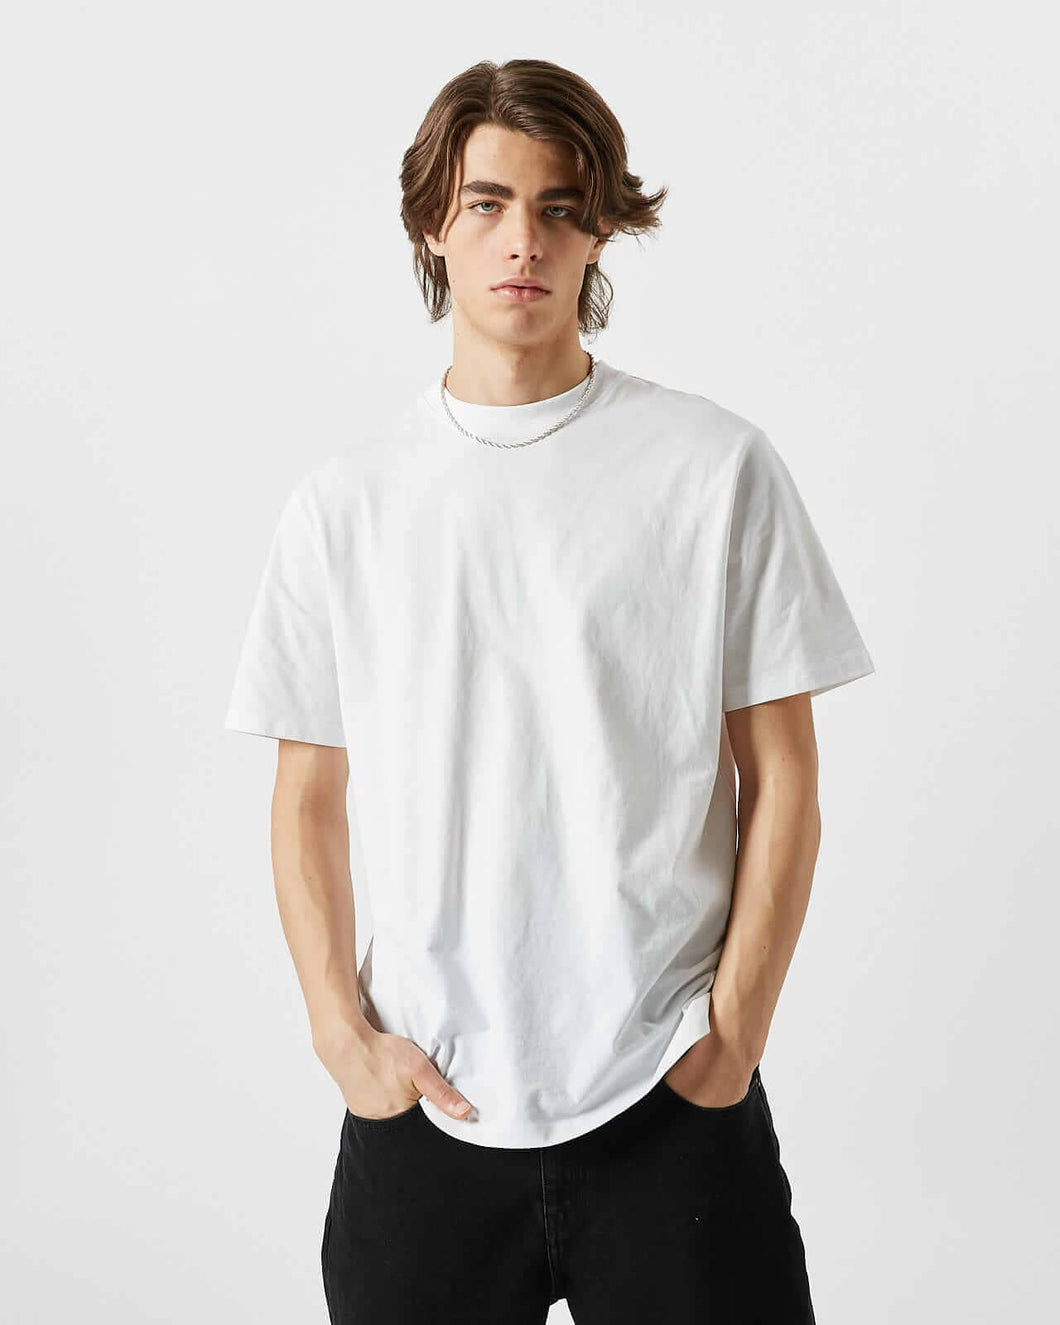 Minimum - Aarhus 2.0 T-Shirt 3255a - White 000 T-Shirts Minimum